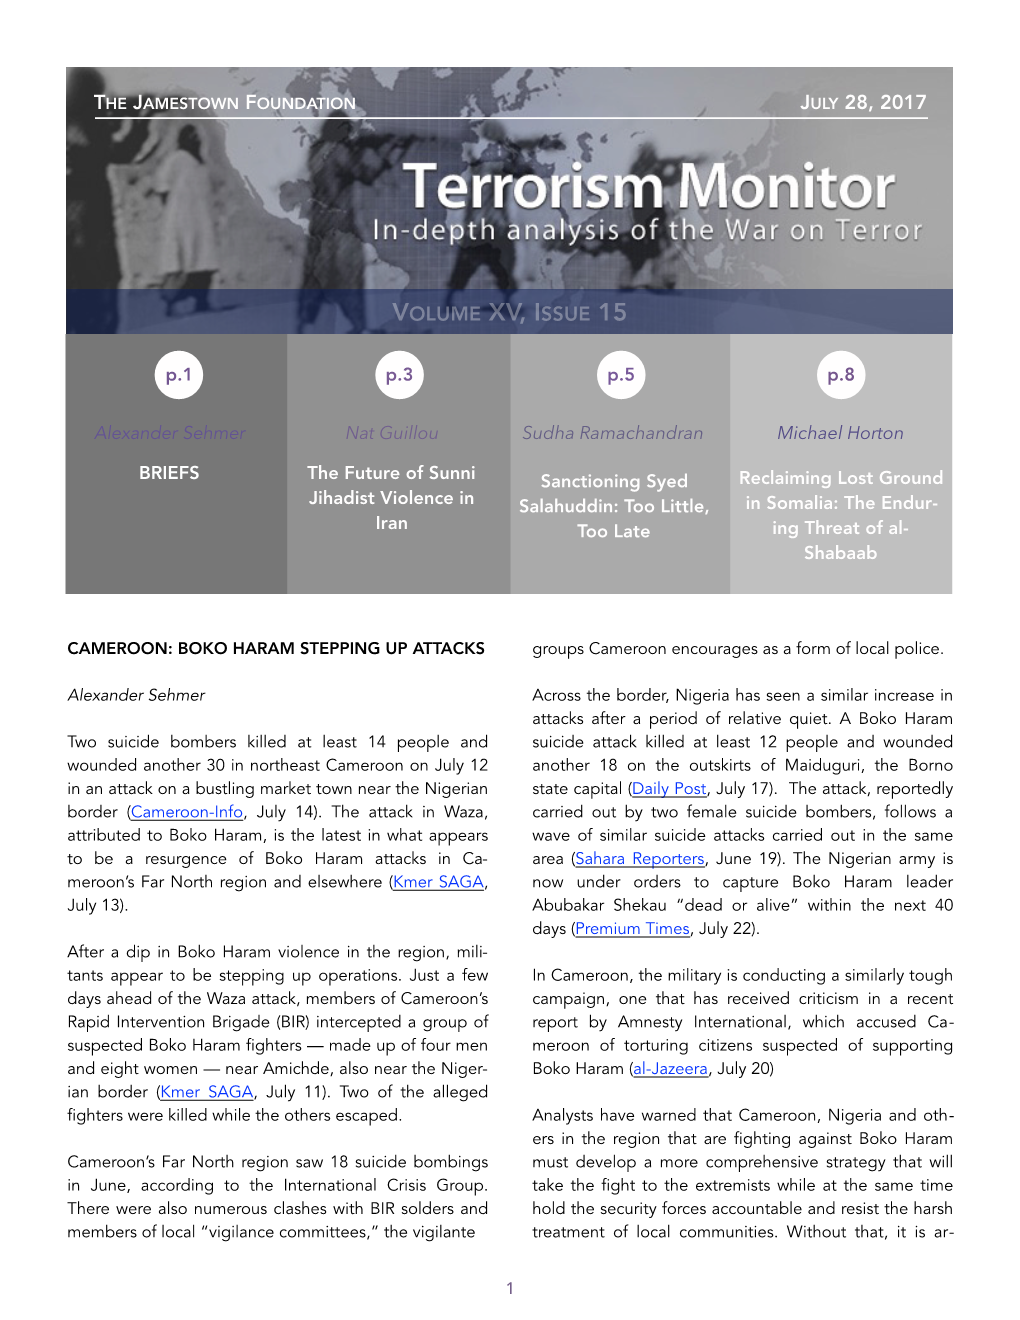 Terrorism Monitor)